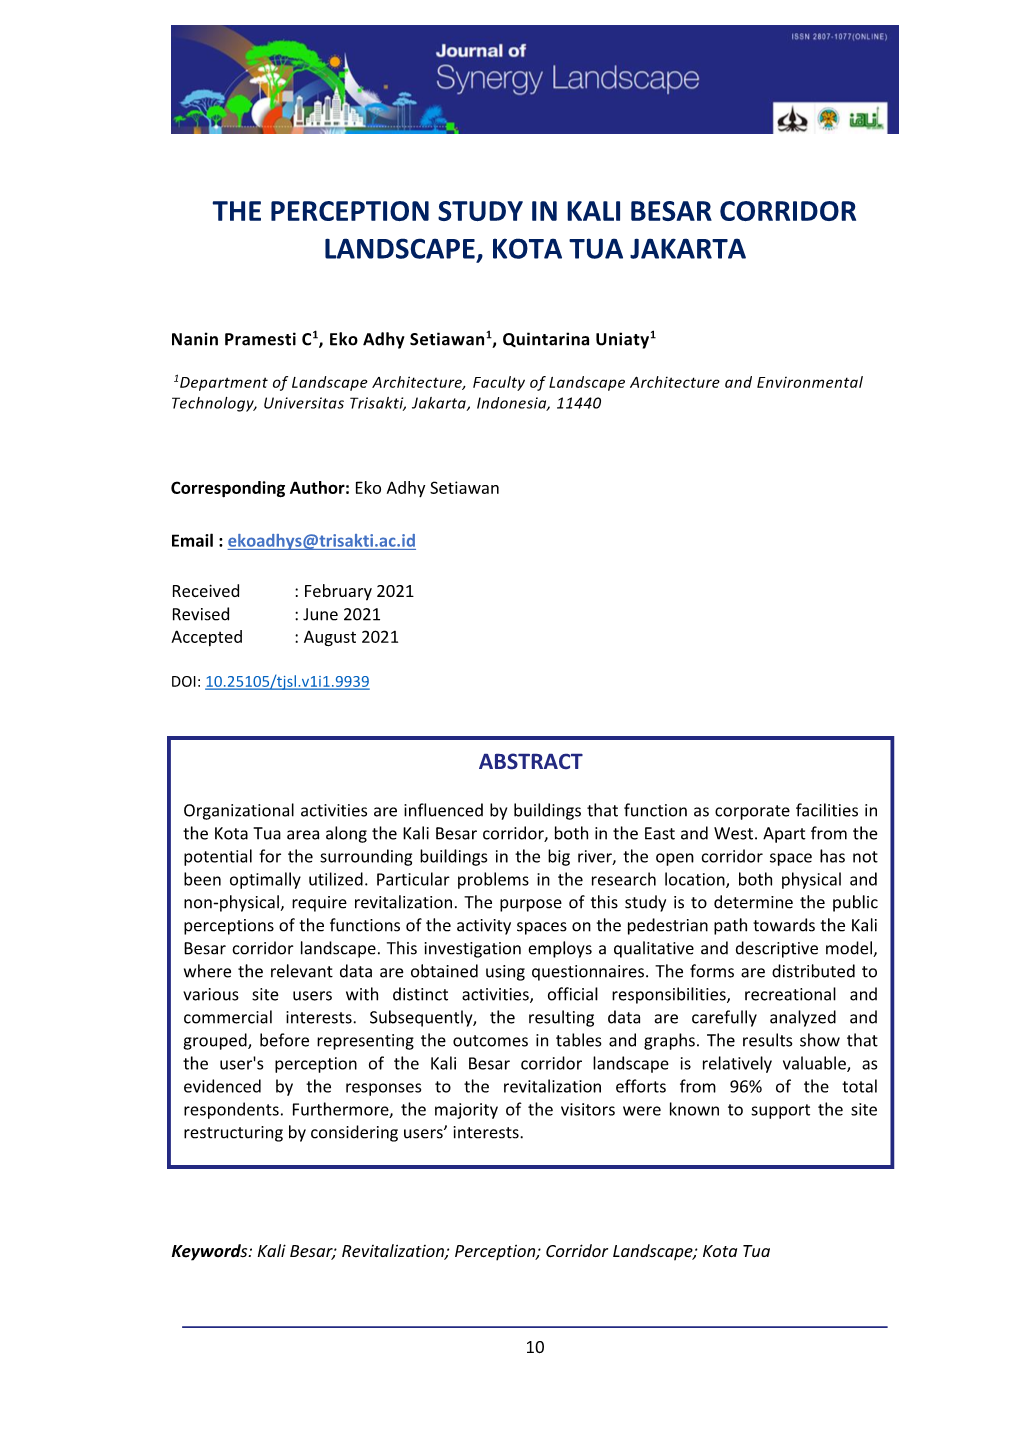 The Perception Study in Kali Besar Corridor Landscape, Kota Tua Jakarta